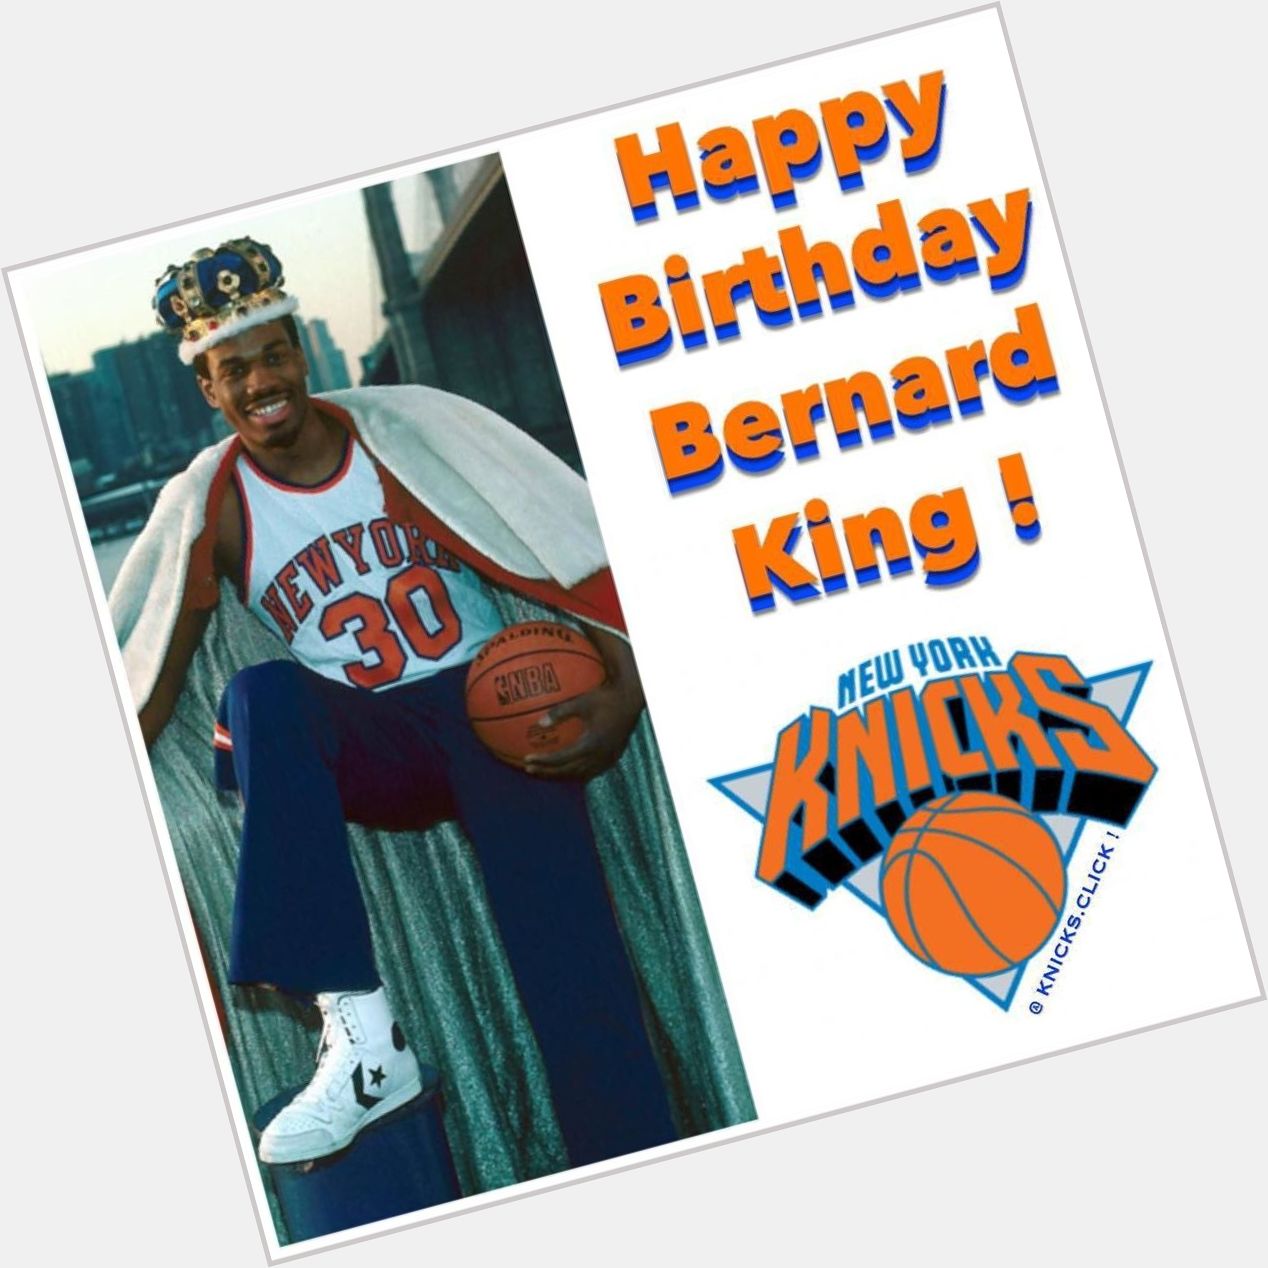 12/04/15  HAPPY BIRTHDAY BERNARD KING !  ( 59 )      